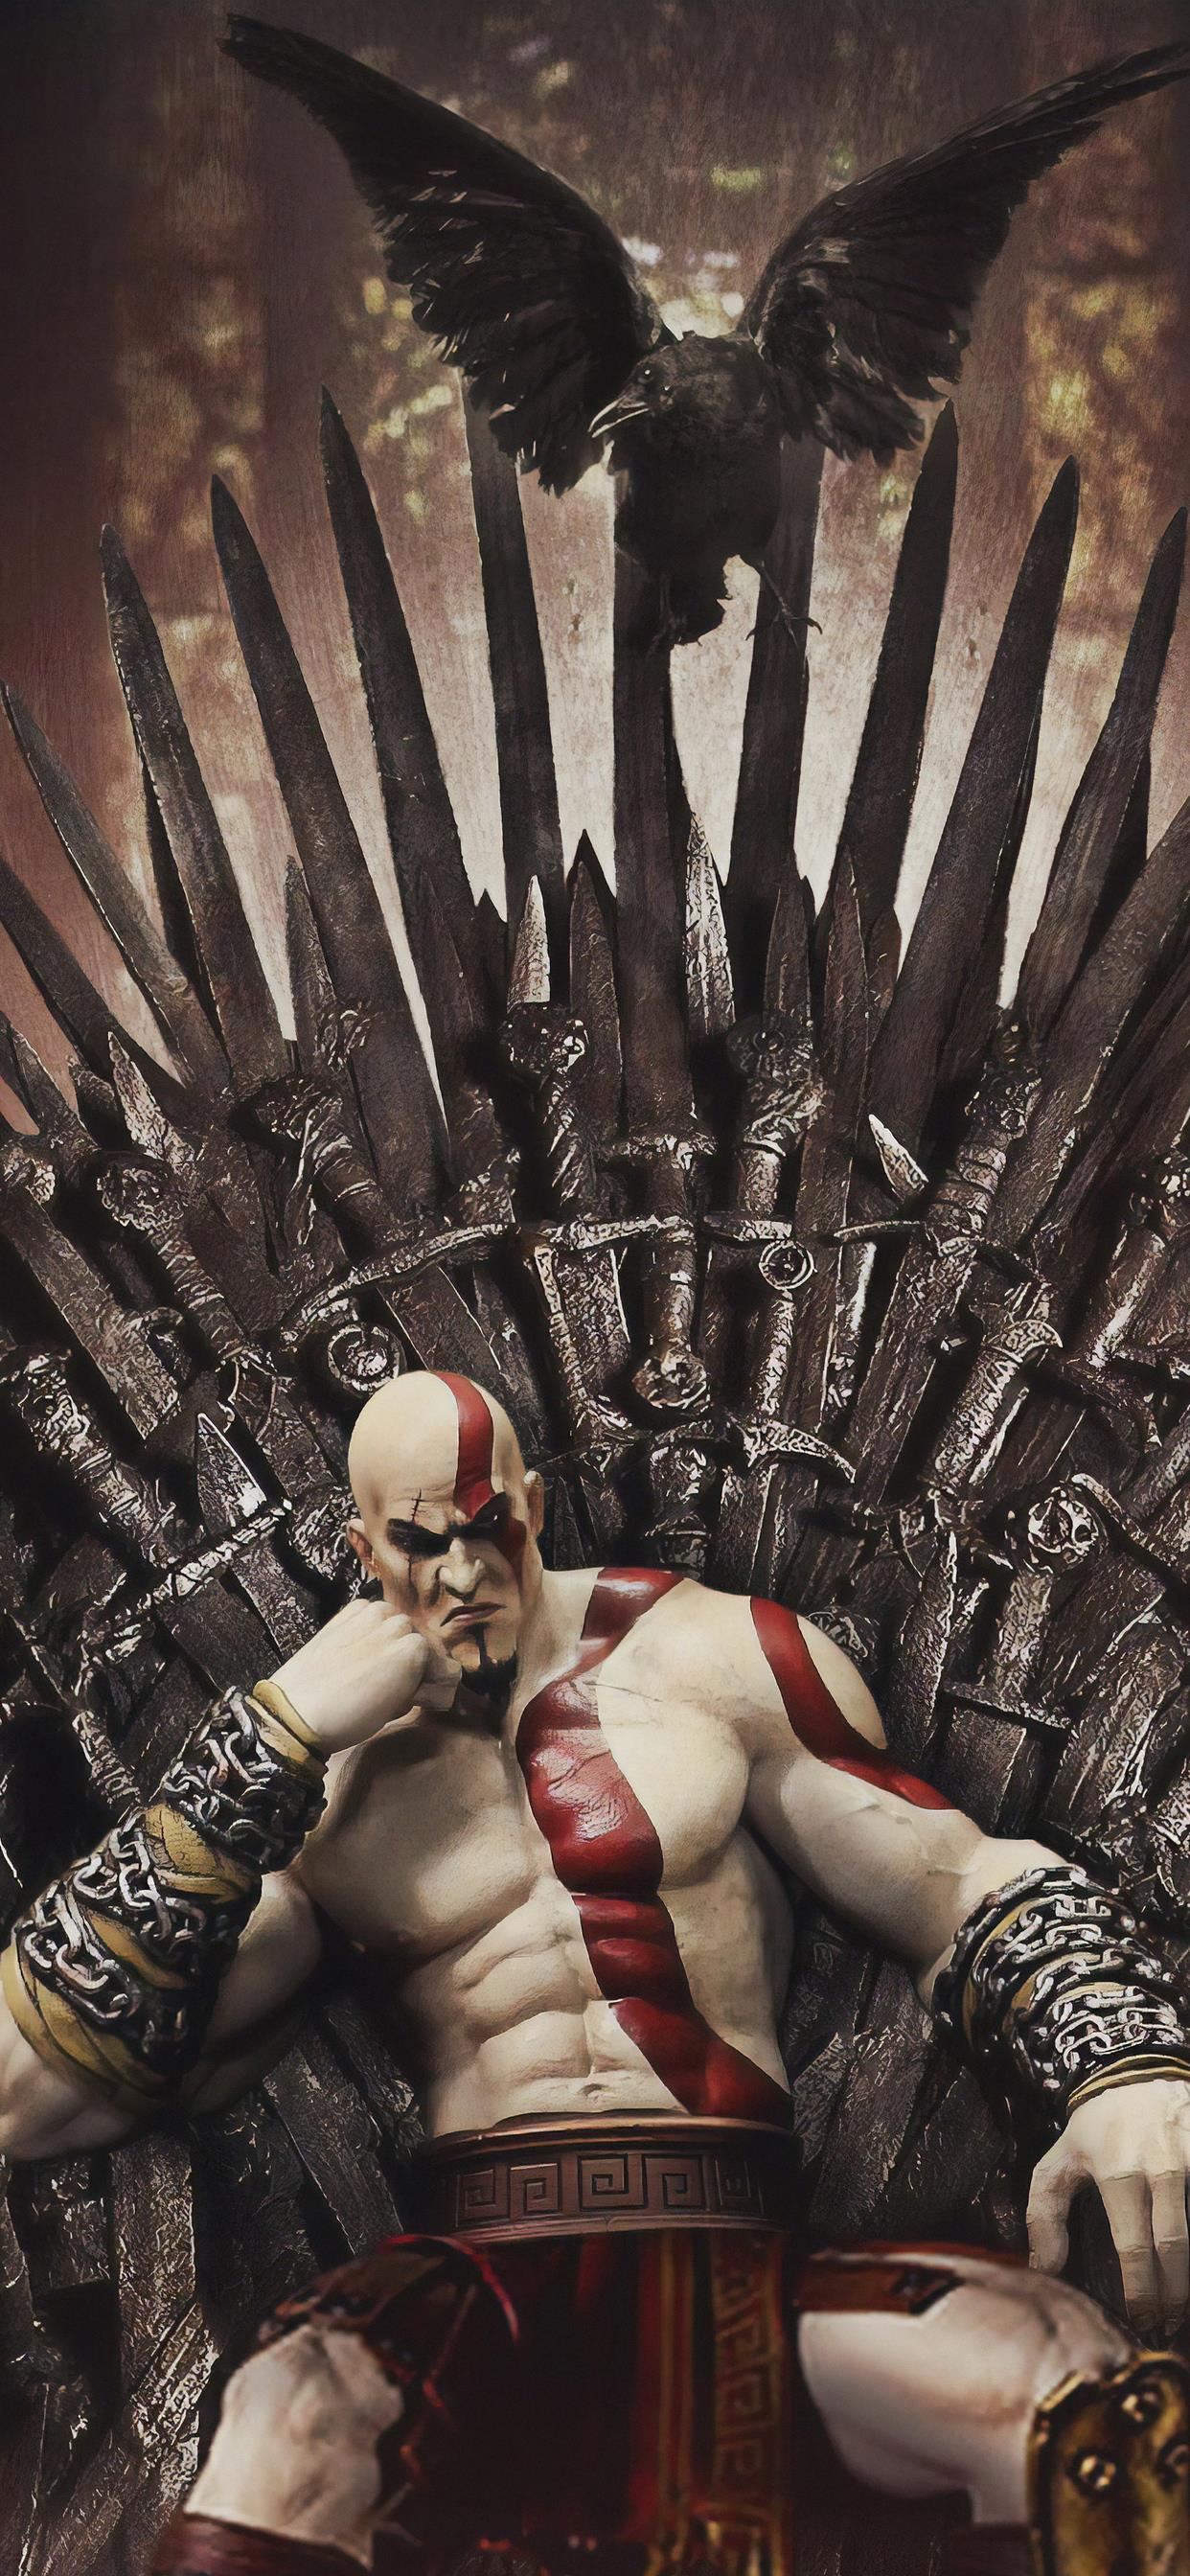 kratos on thrones iPhone X Wallpaper Free Download